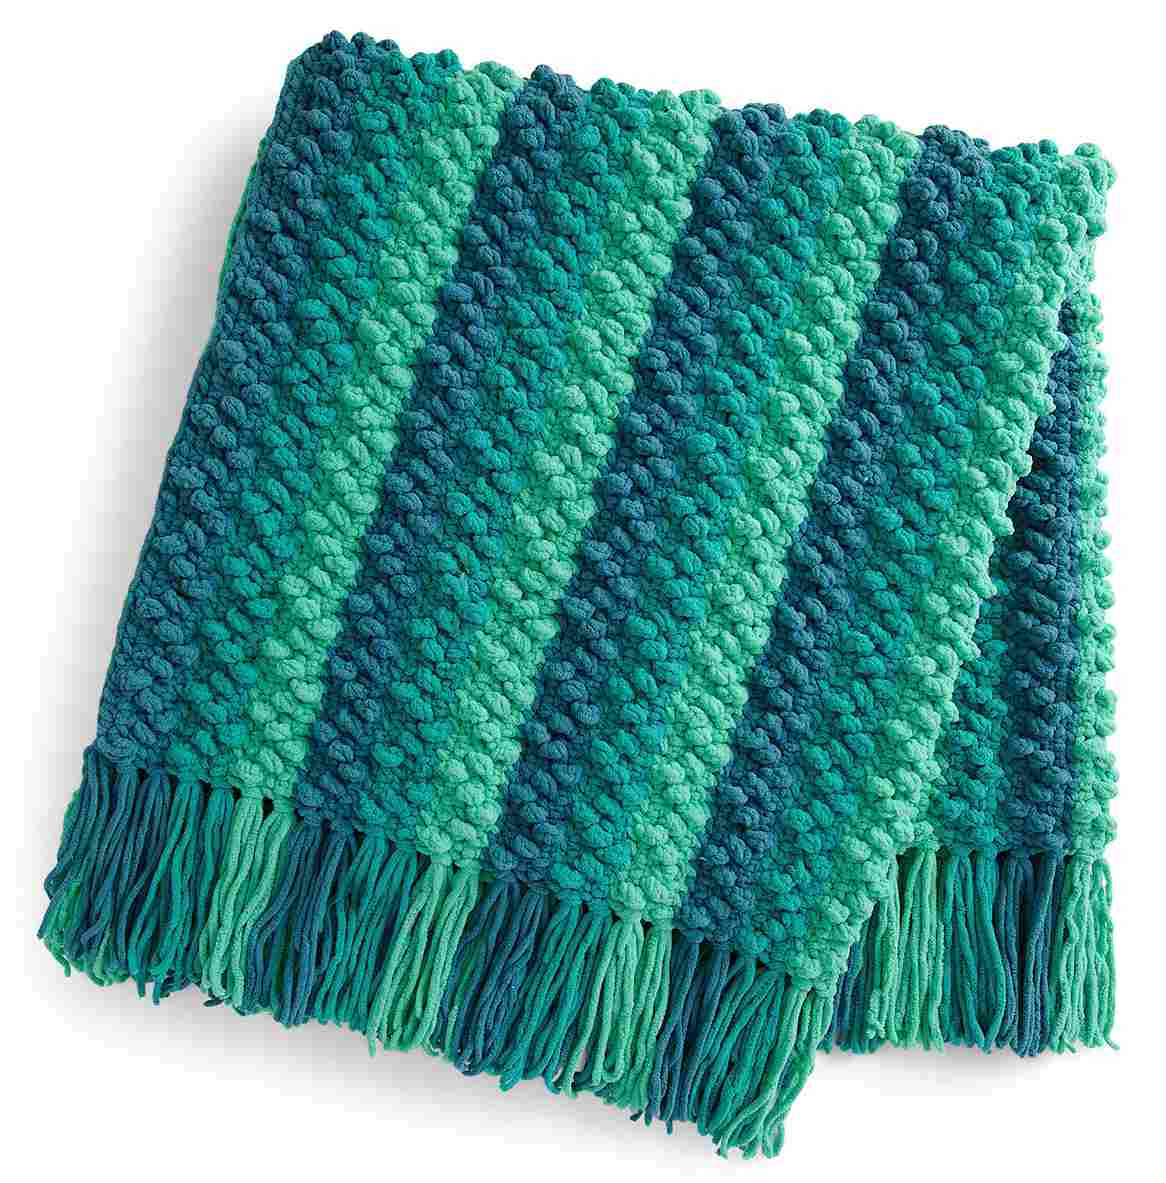 Chevron Bobble Stripes Blanket - Free Crochet Pattern